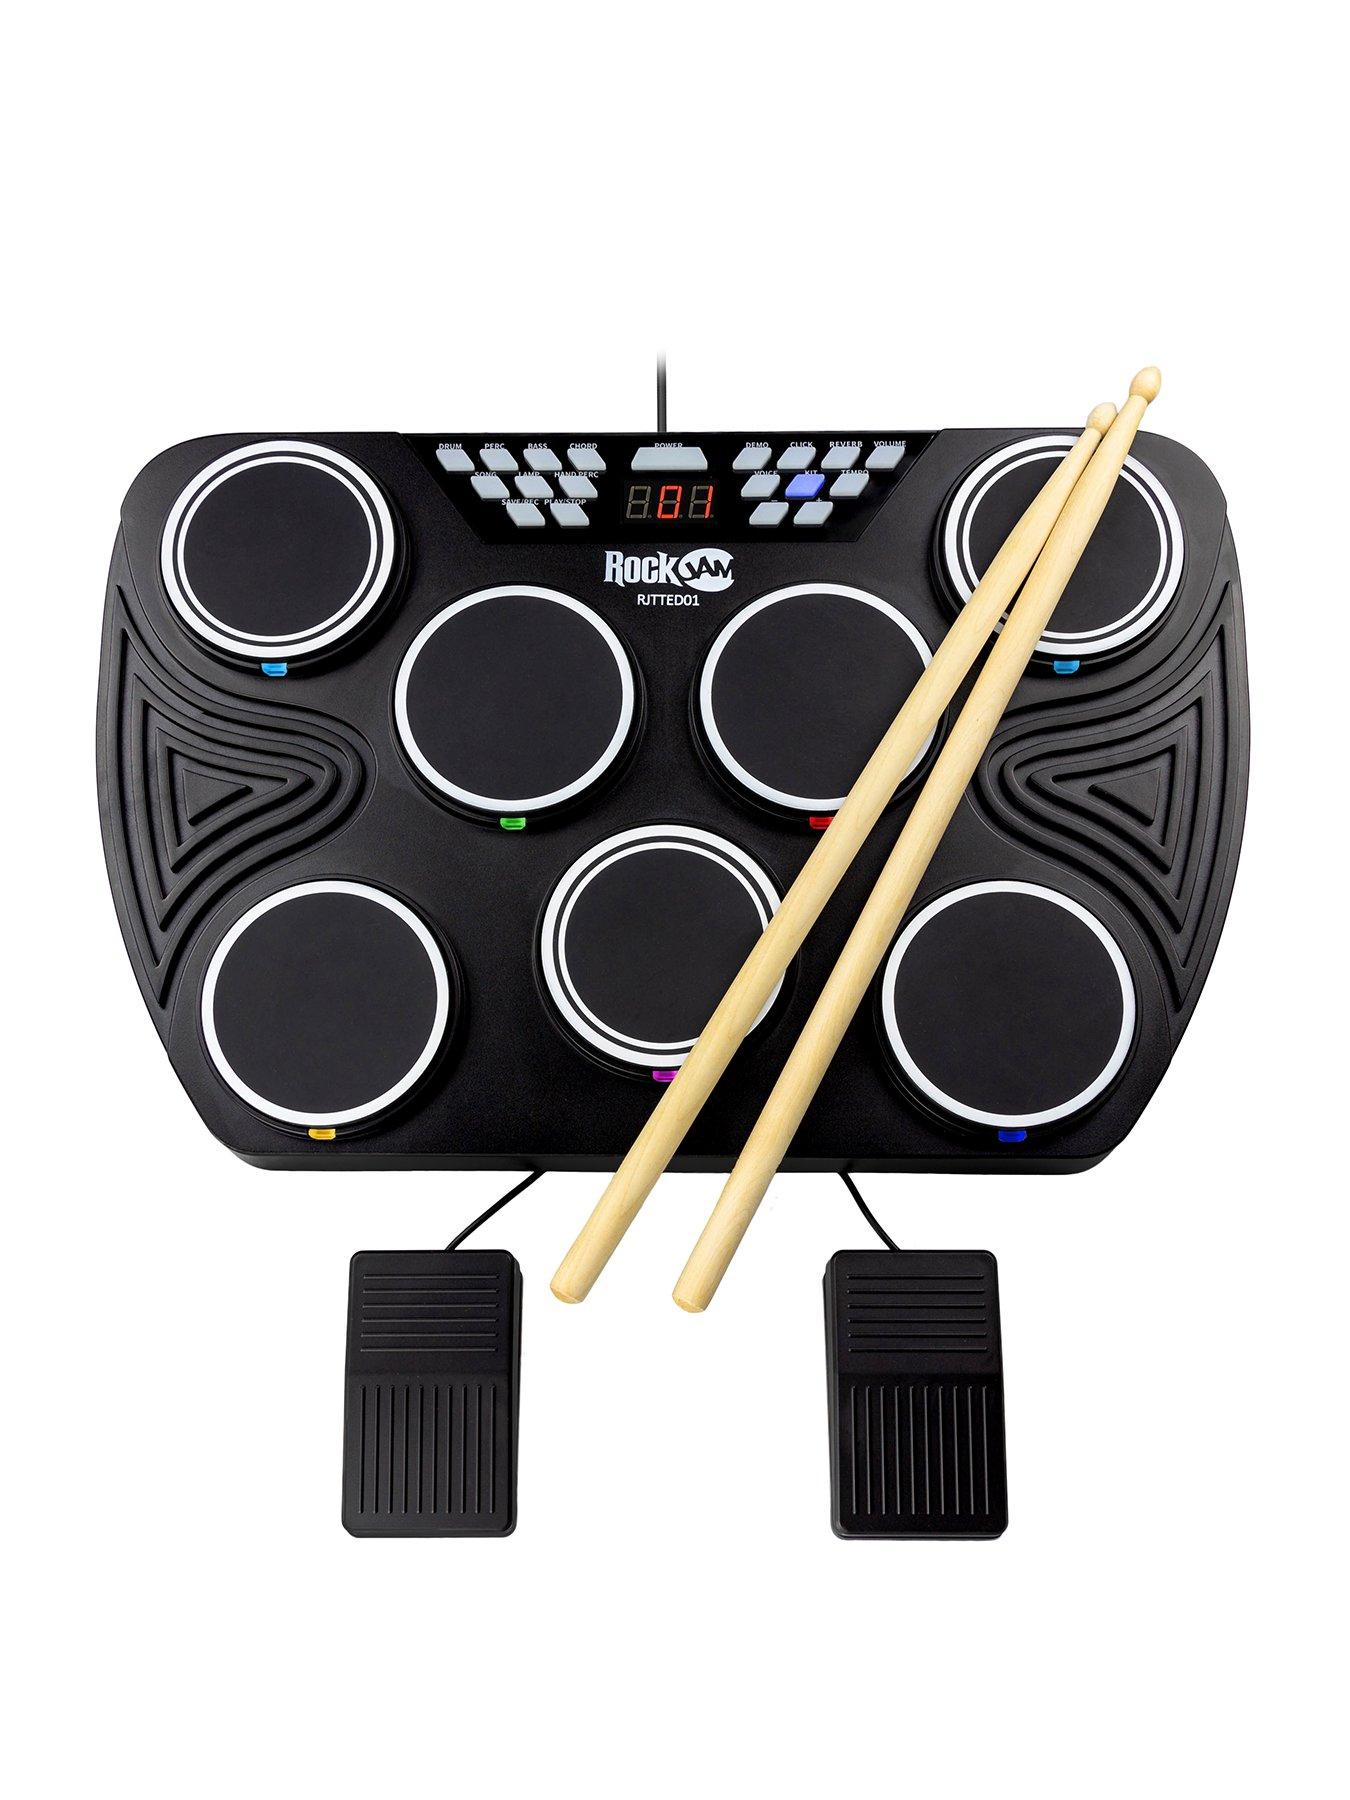 RockJam 7-Pad Electronic Bluetooth MIDI Drum Kit